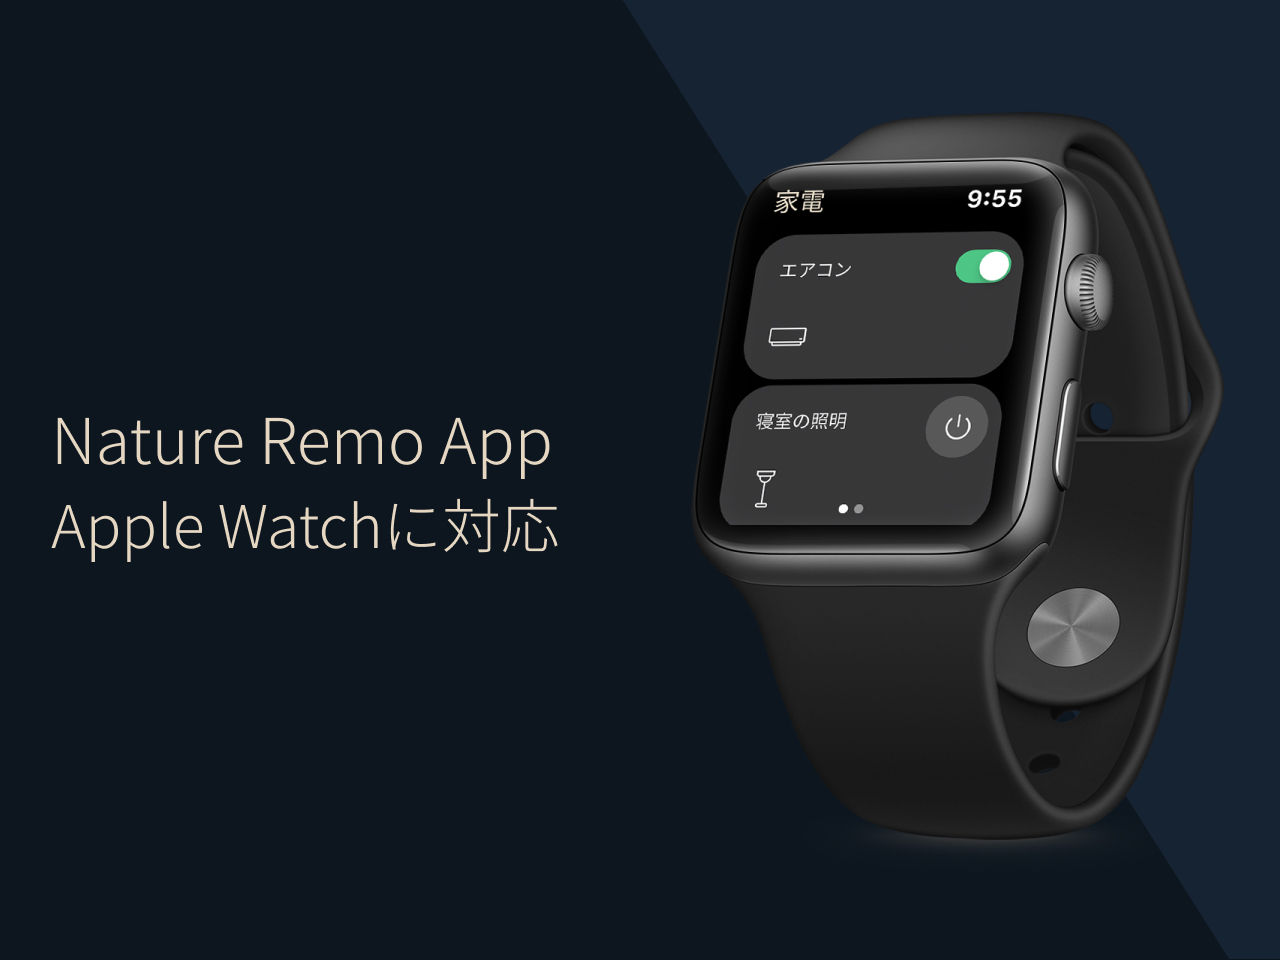 Apple Watchで家電の操作が可能に―スマートリモコンNature Remo専用アプリがアップデートで対応